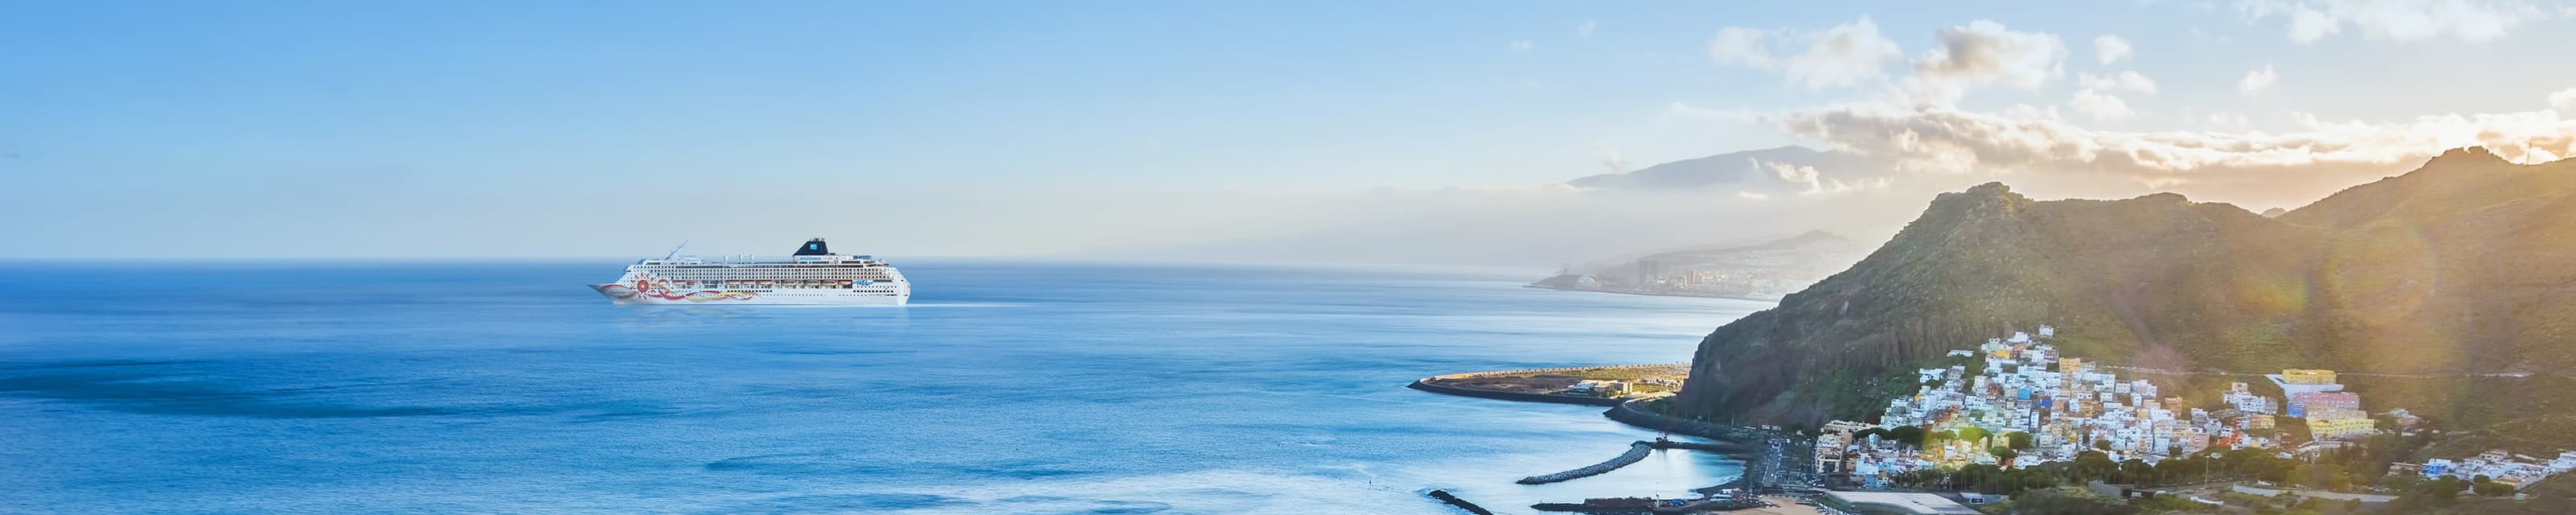 MI.Page-Canary-Islands-Cruises